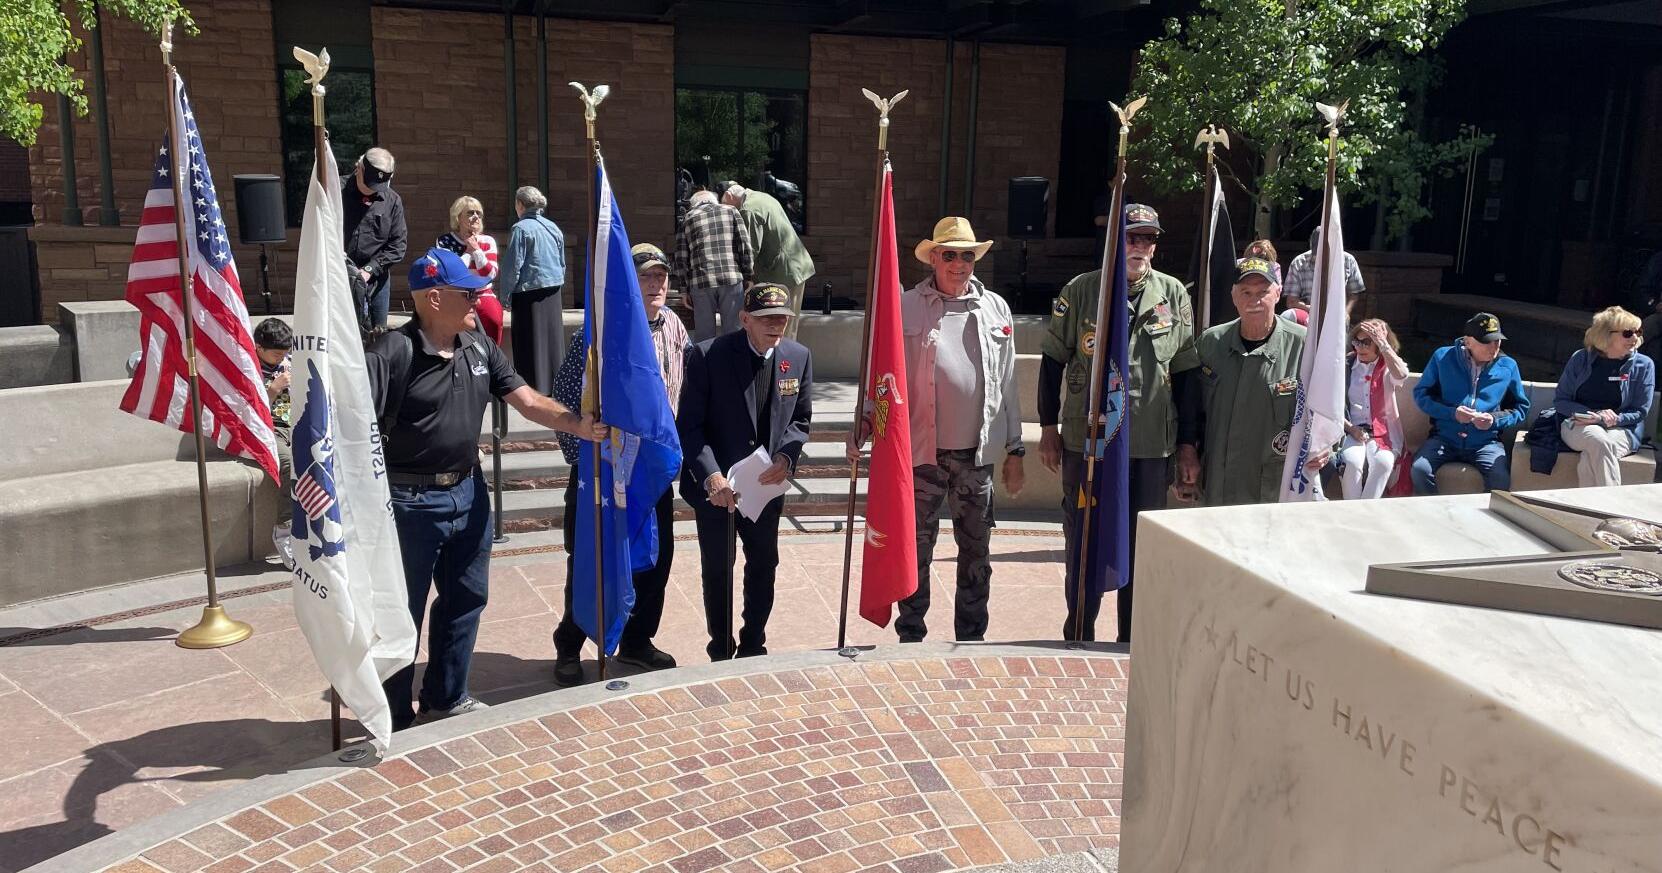 Fallen soldiers, living legend honored in Aspen’s Memorial Day observance